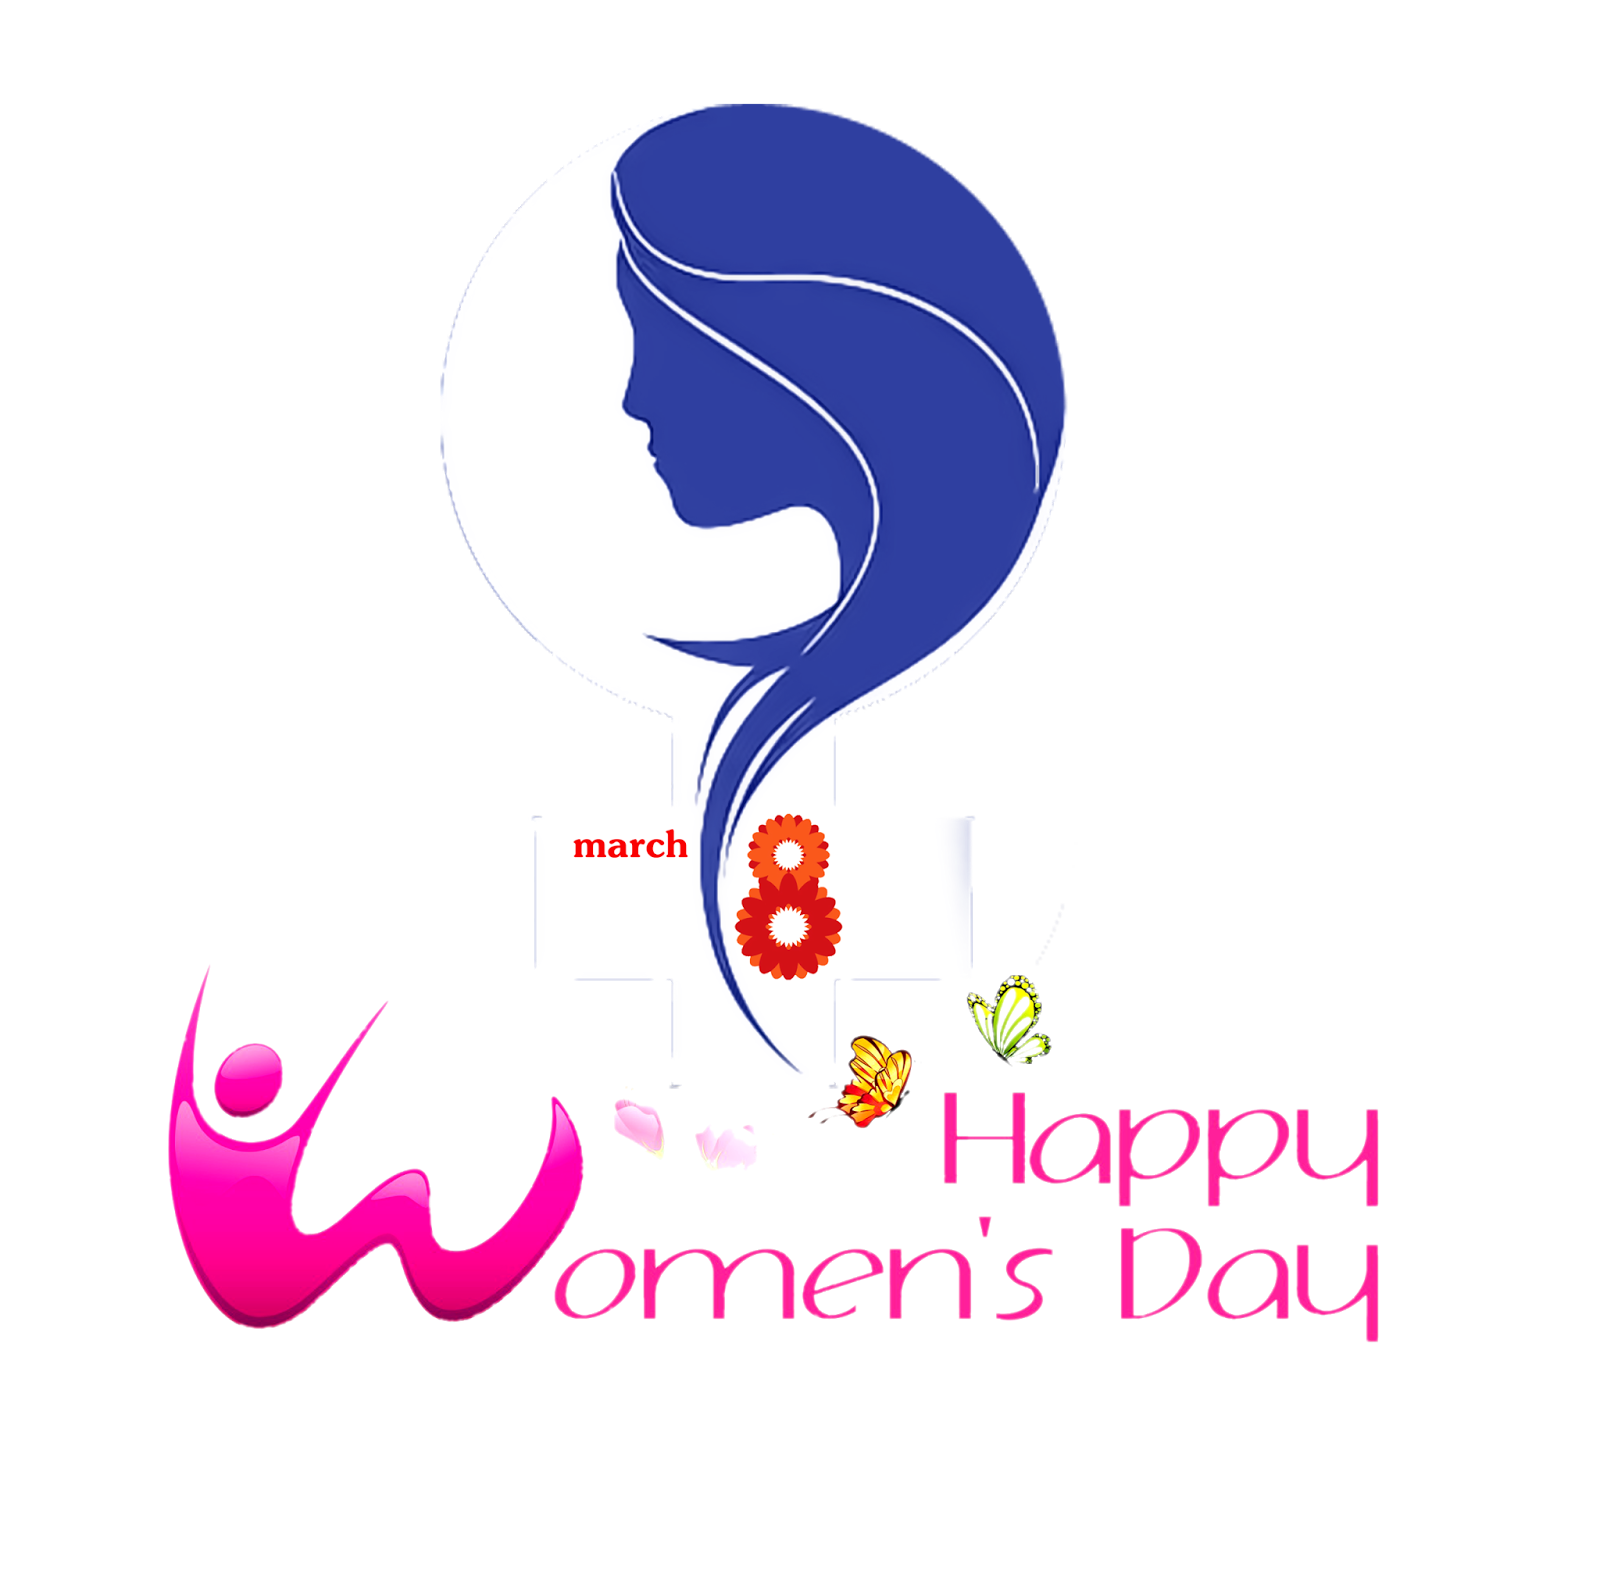 Women day zapodarkom ru. Логотип International Womens Day. Логотип международного женского дня. Картинка с логотипом международного женского дня. Логотип счастливая женщина.